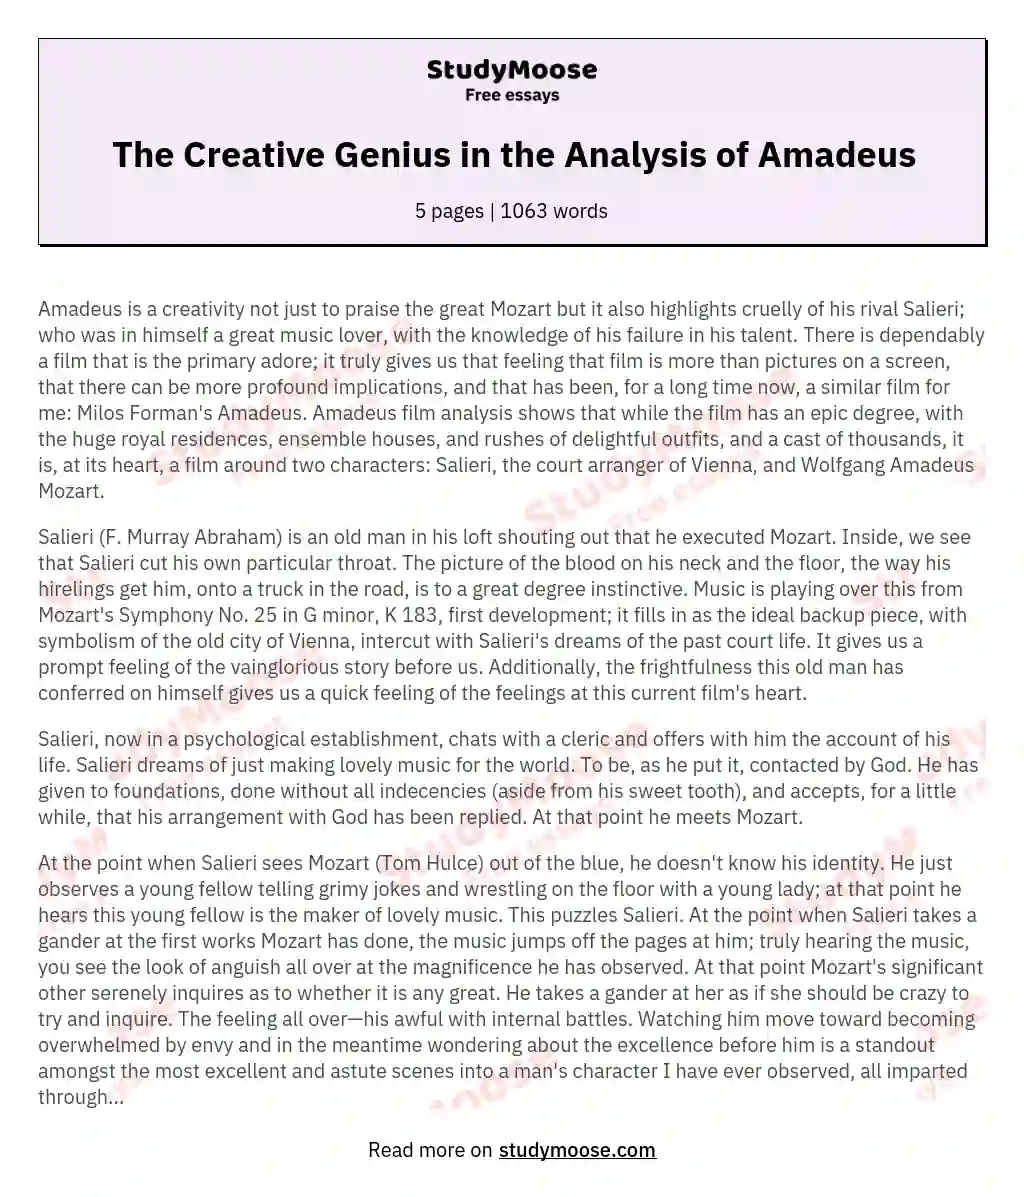 The Creative Genius in the Analysis of Amadeus